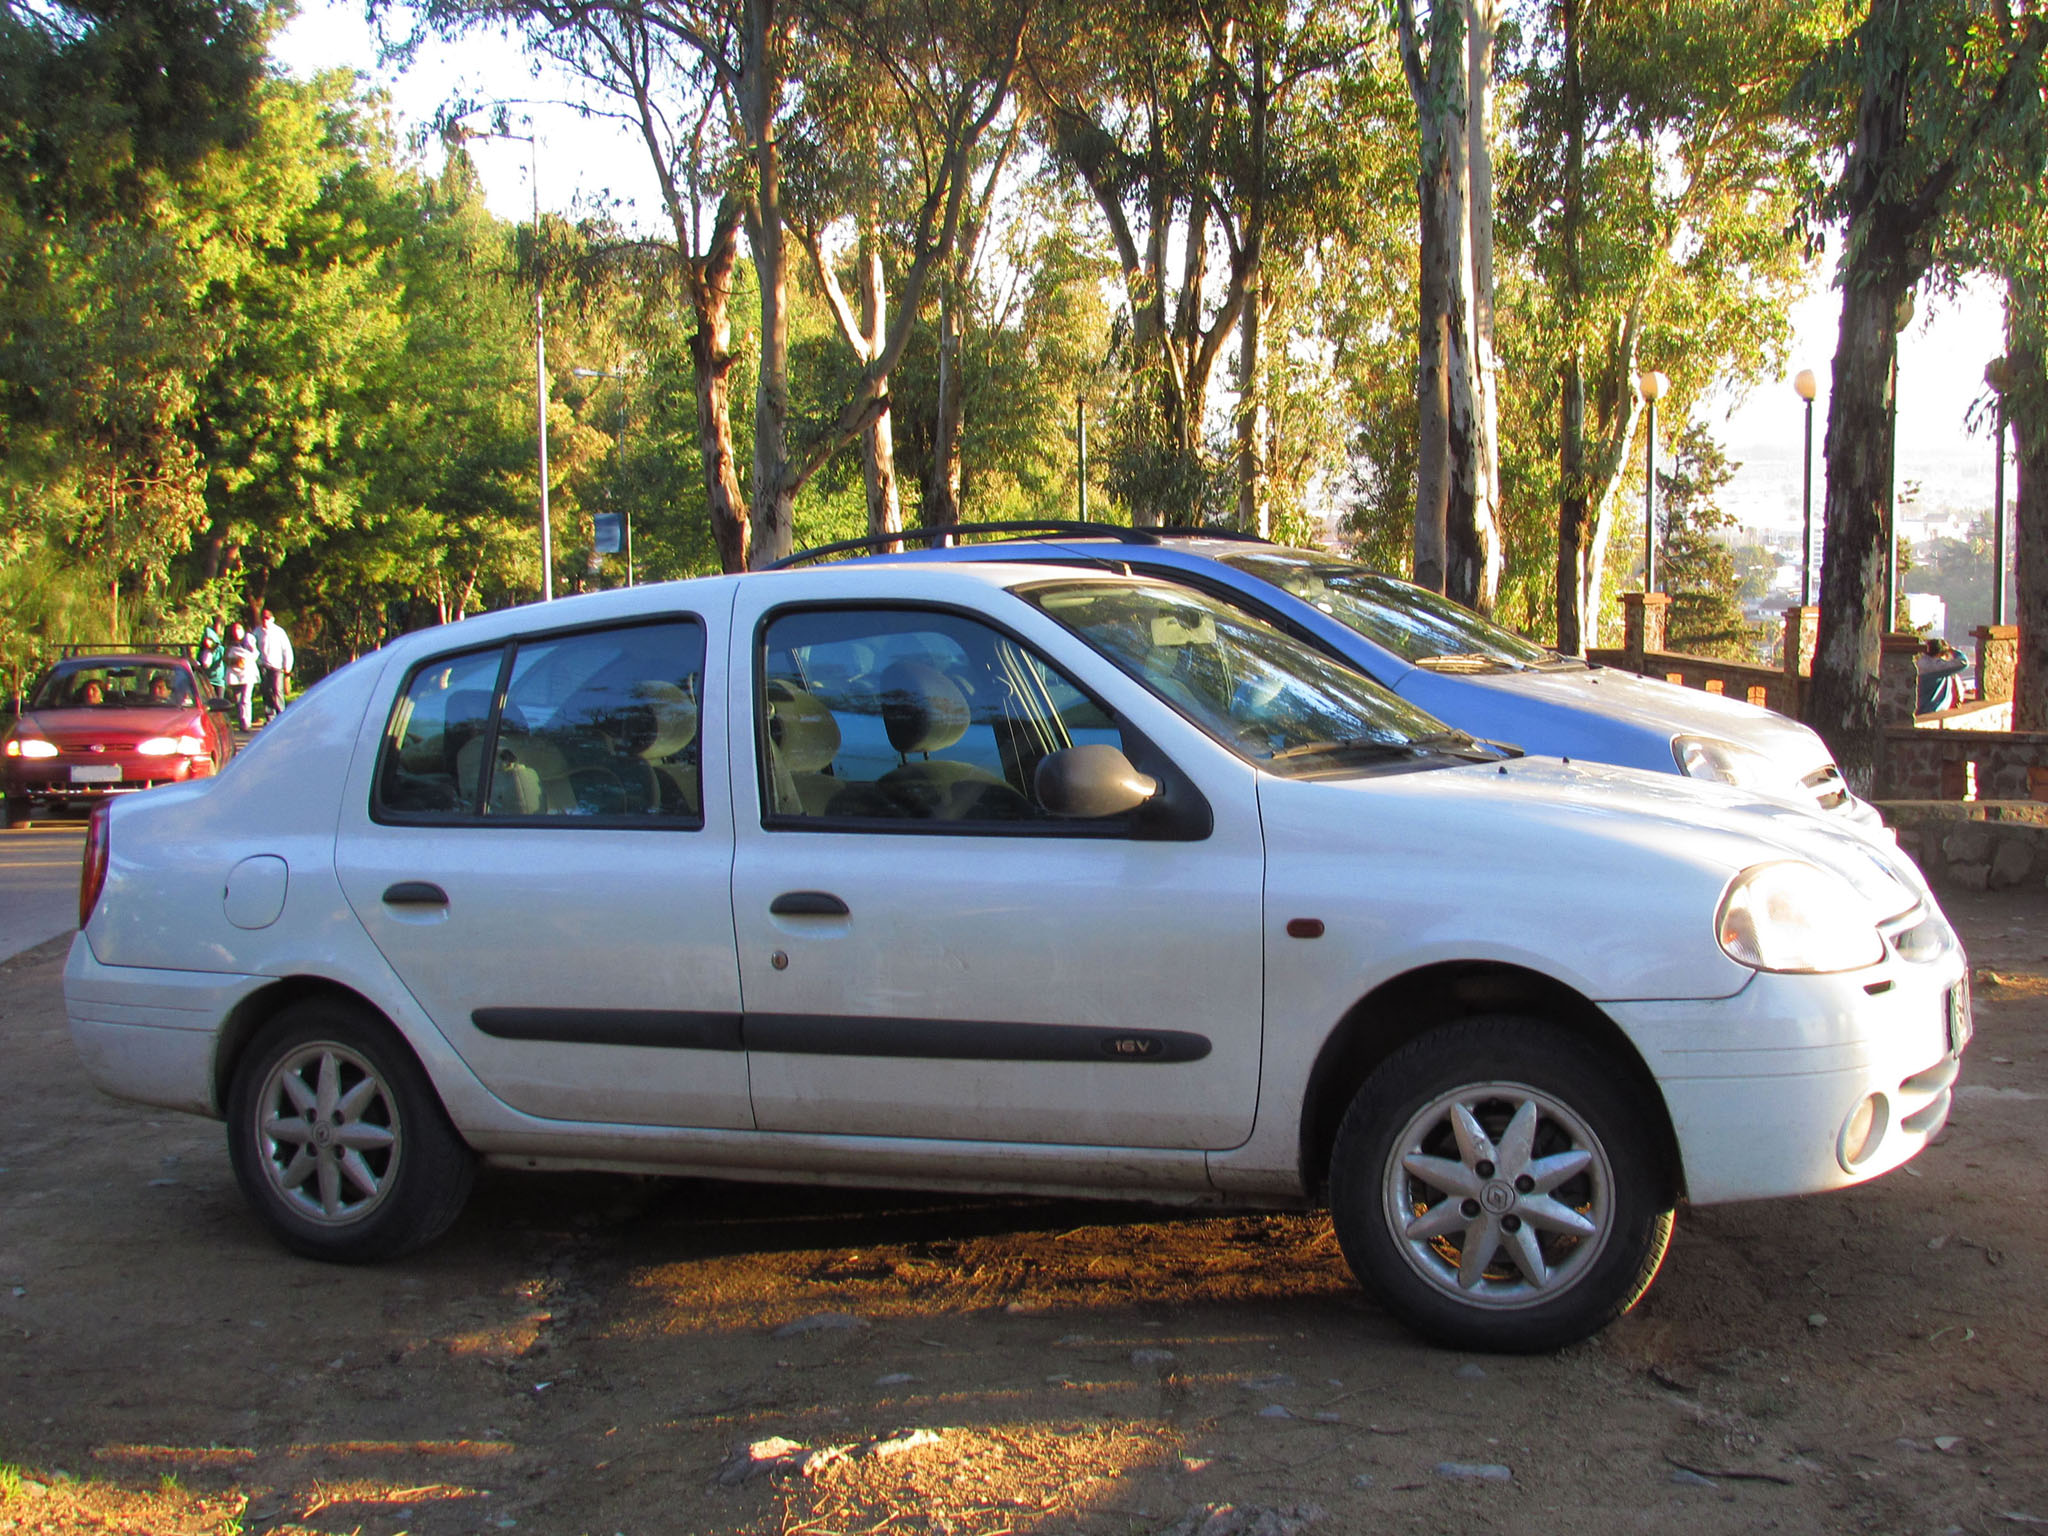 Renault_Clio_1.6_RT_Sedan_2001_(9499596922).jpg